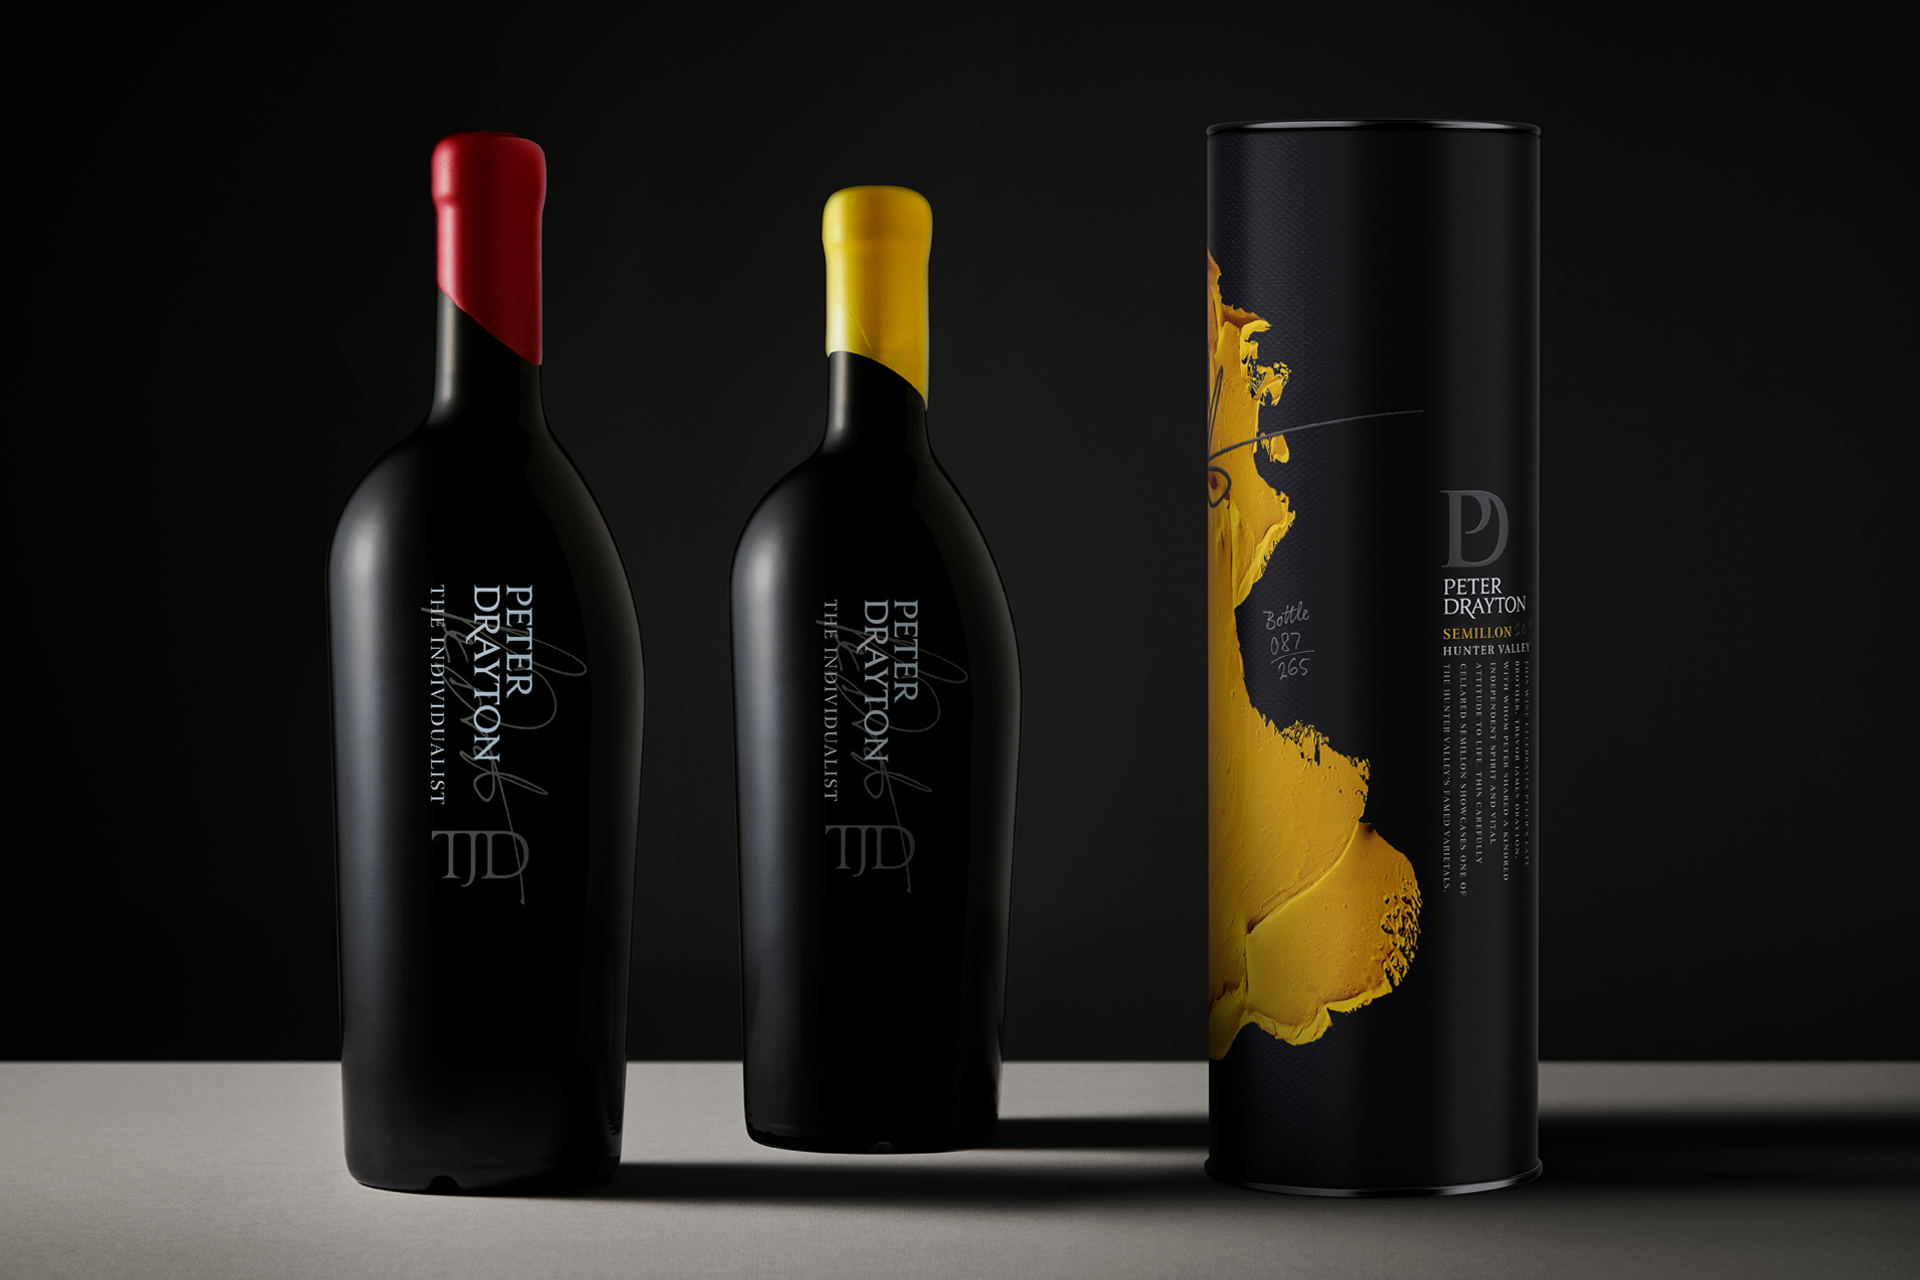 Ultra-Premium Wines in Honour of Trevor James Drayton (TJD) The Individualist